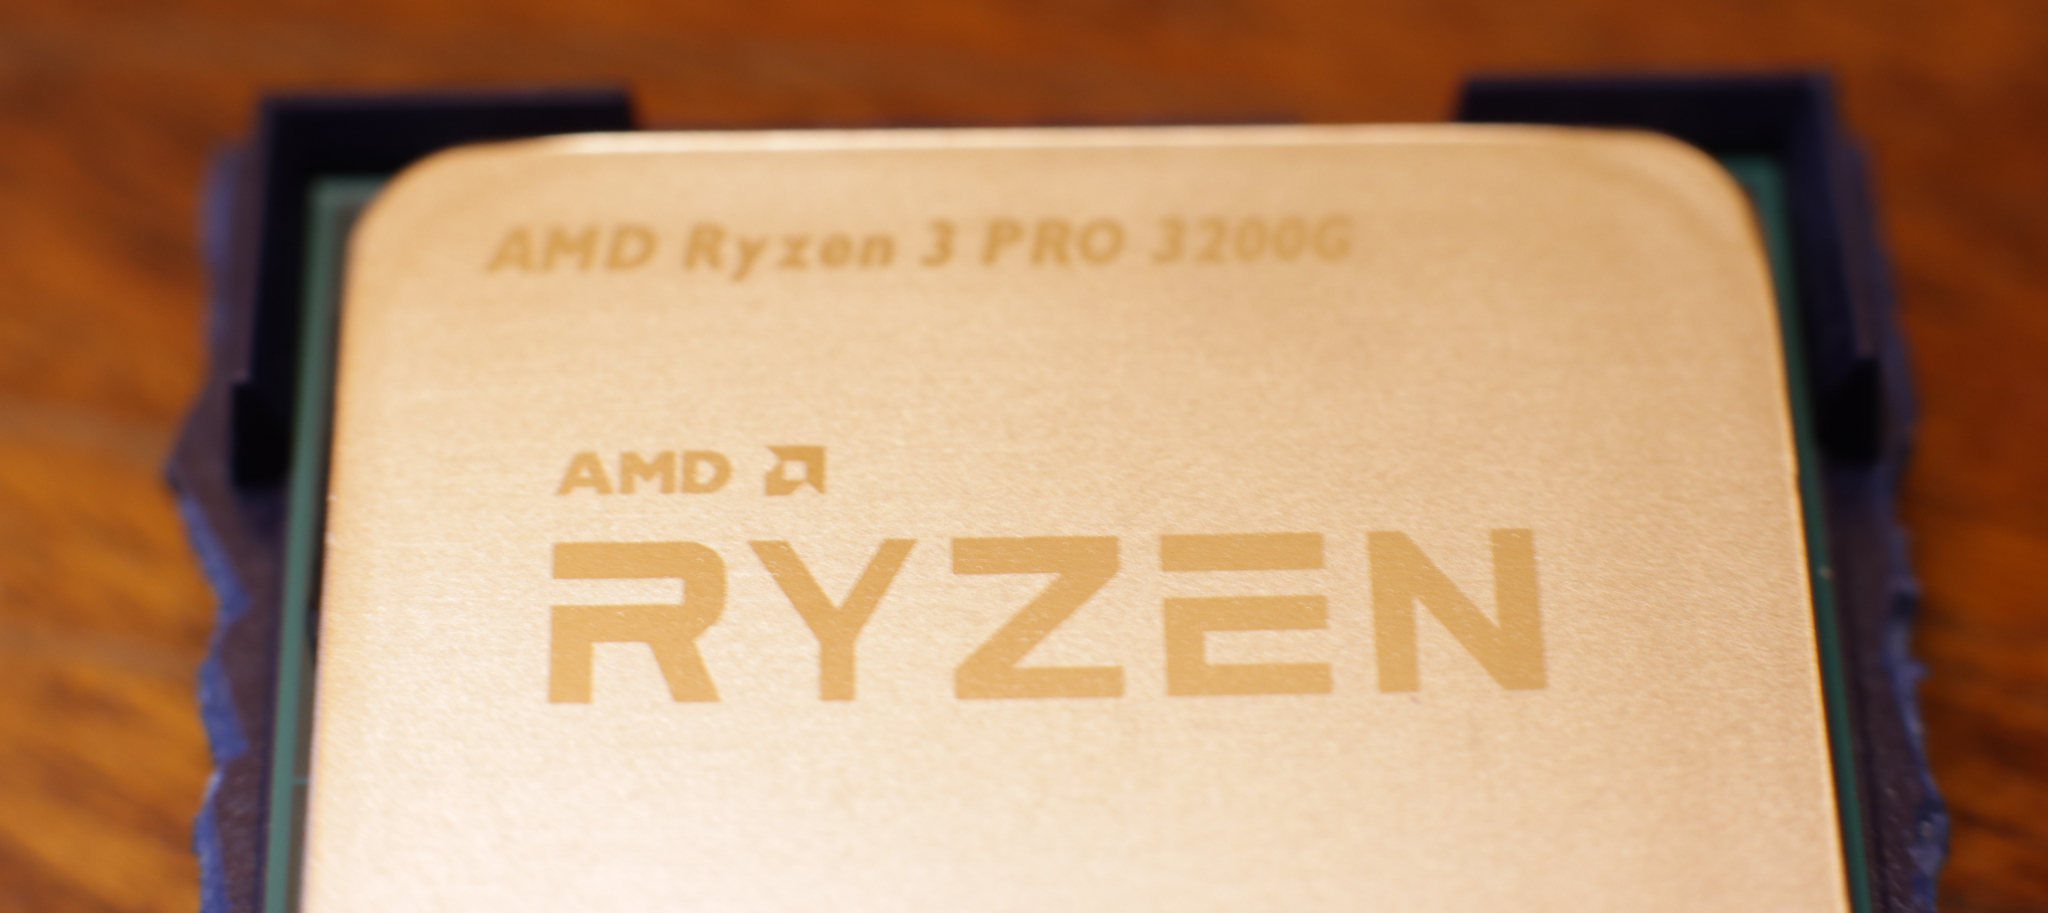 3 pro 3200g. Процессор AMD Ryzen 3 3200g. AMD Ryzen 3 3200g OEM. AMD Ryzen 3 Pro 3200g. AMD CPU Ryzen 3 3200g OEM.